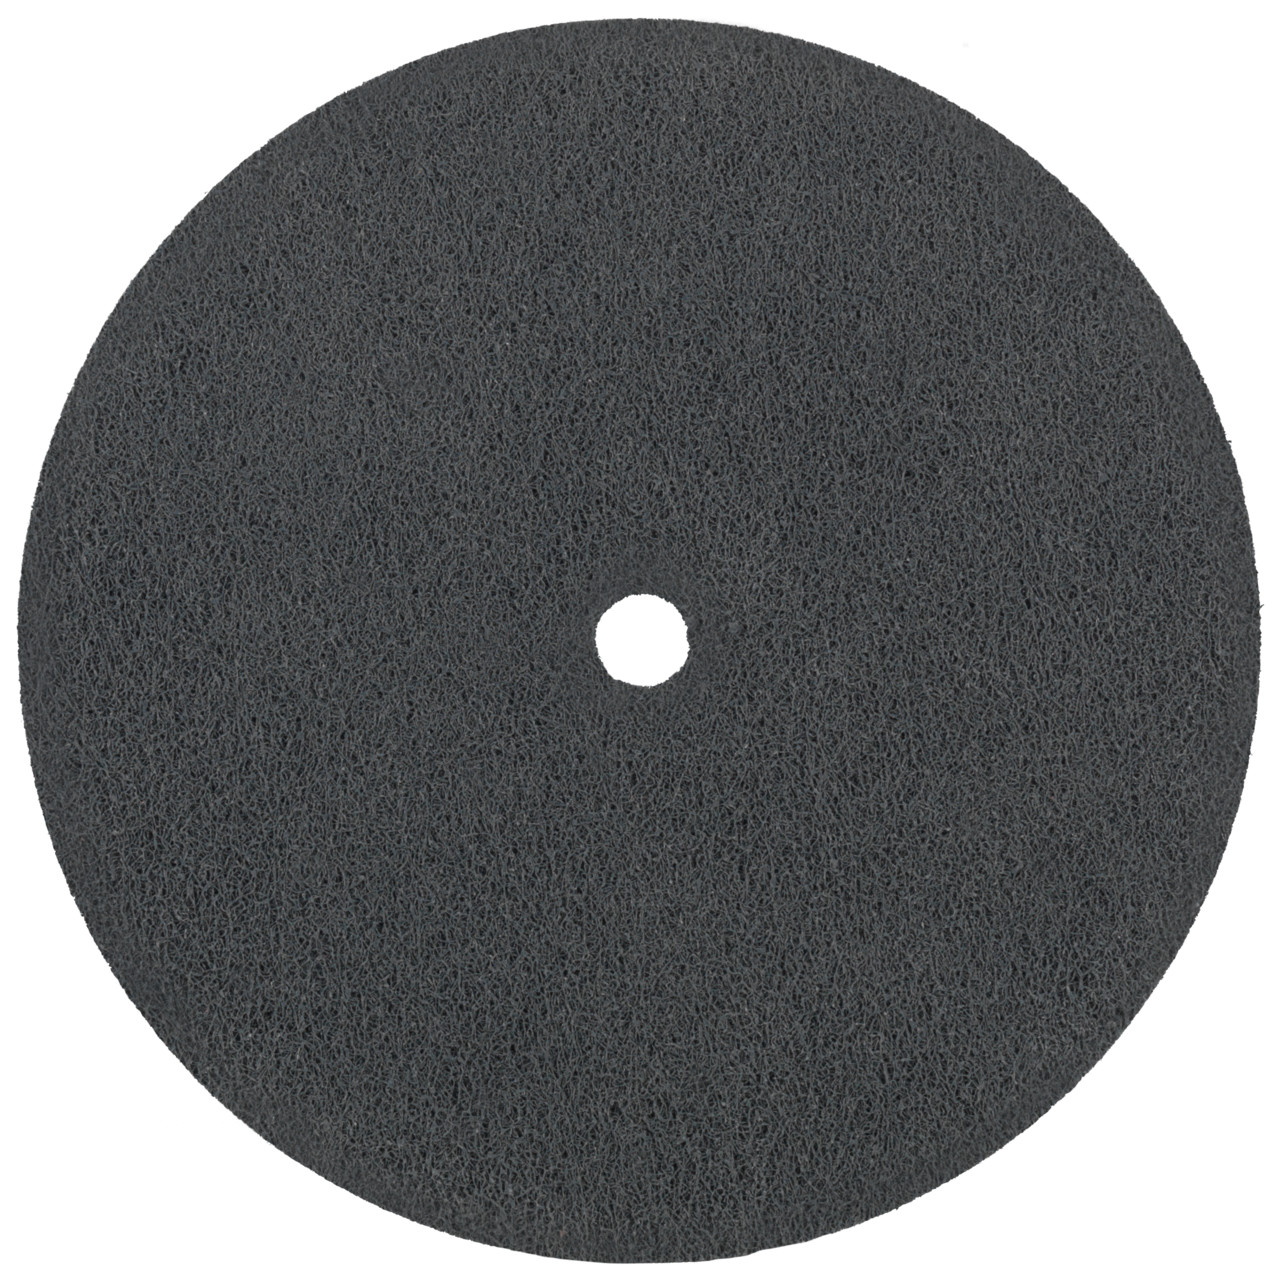 Tyrolit Pressed compact discs DxDxH 152x13x12.7 Universal insert, 3 C FEIN, shape: 1, Art. 34190292